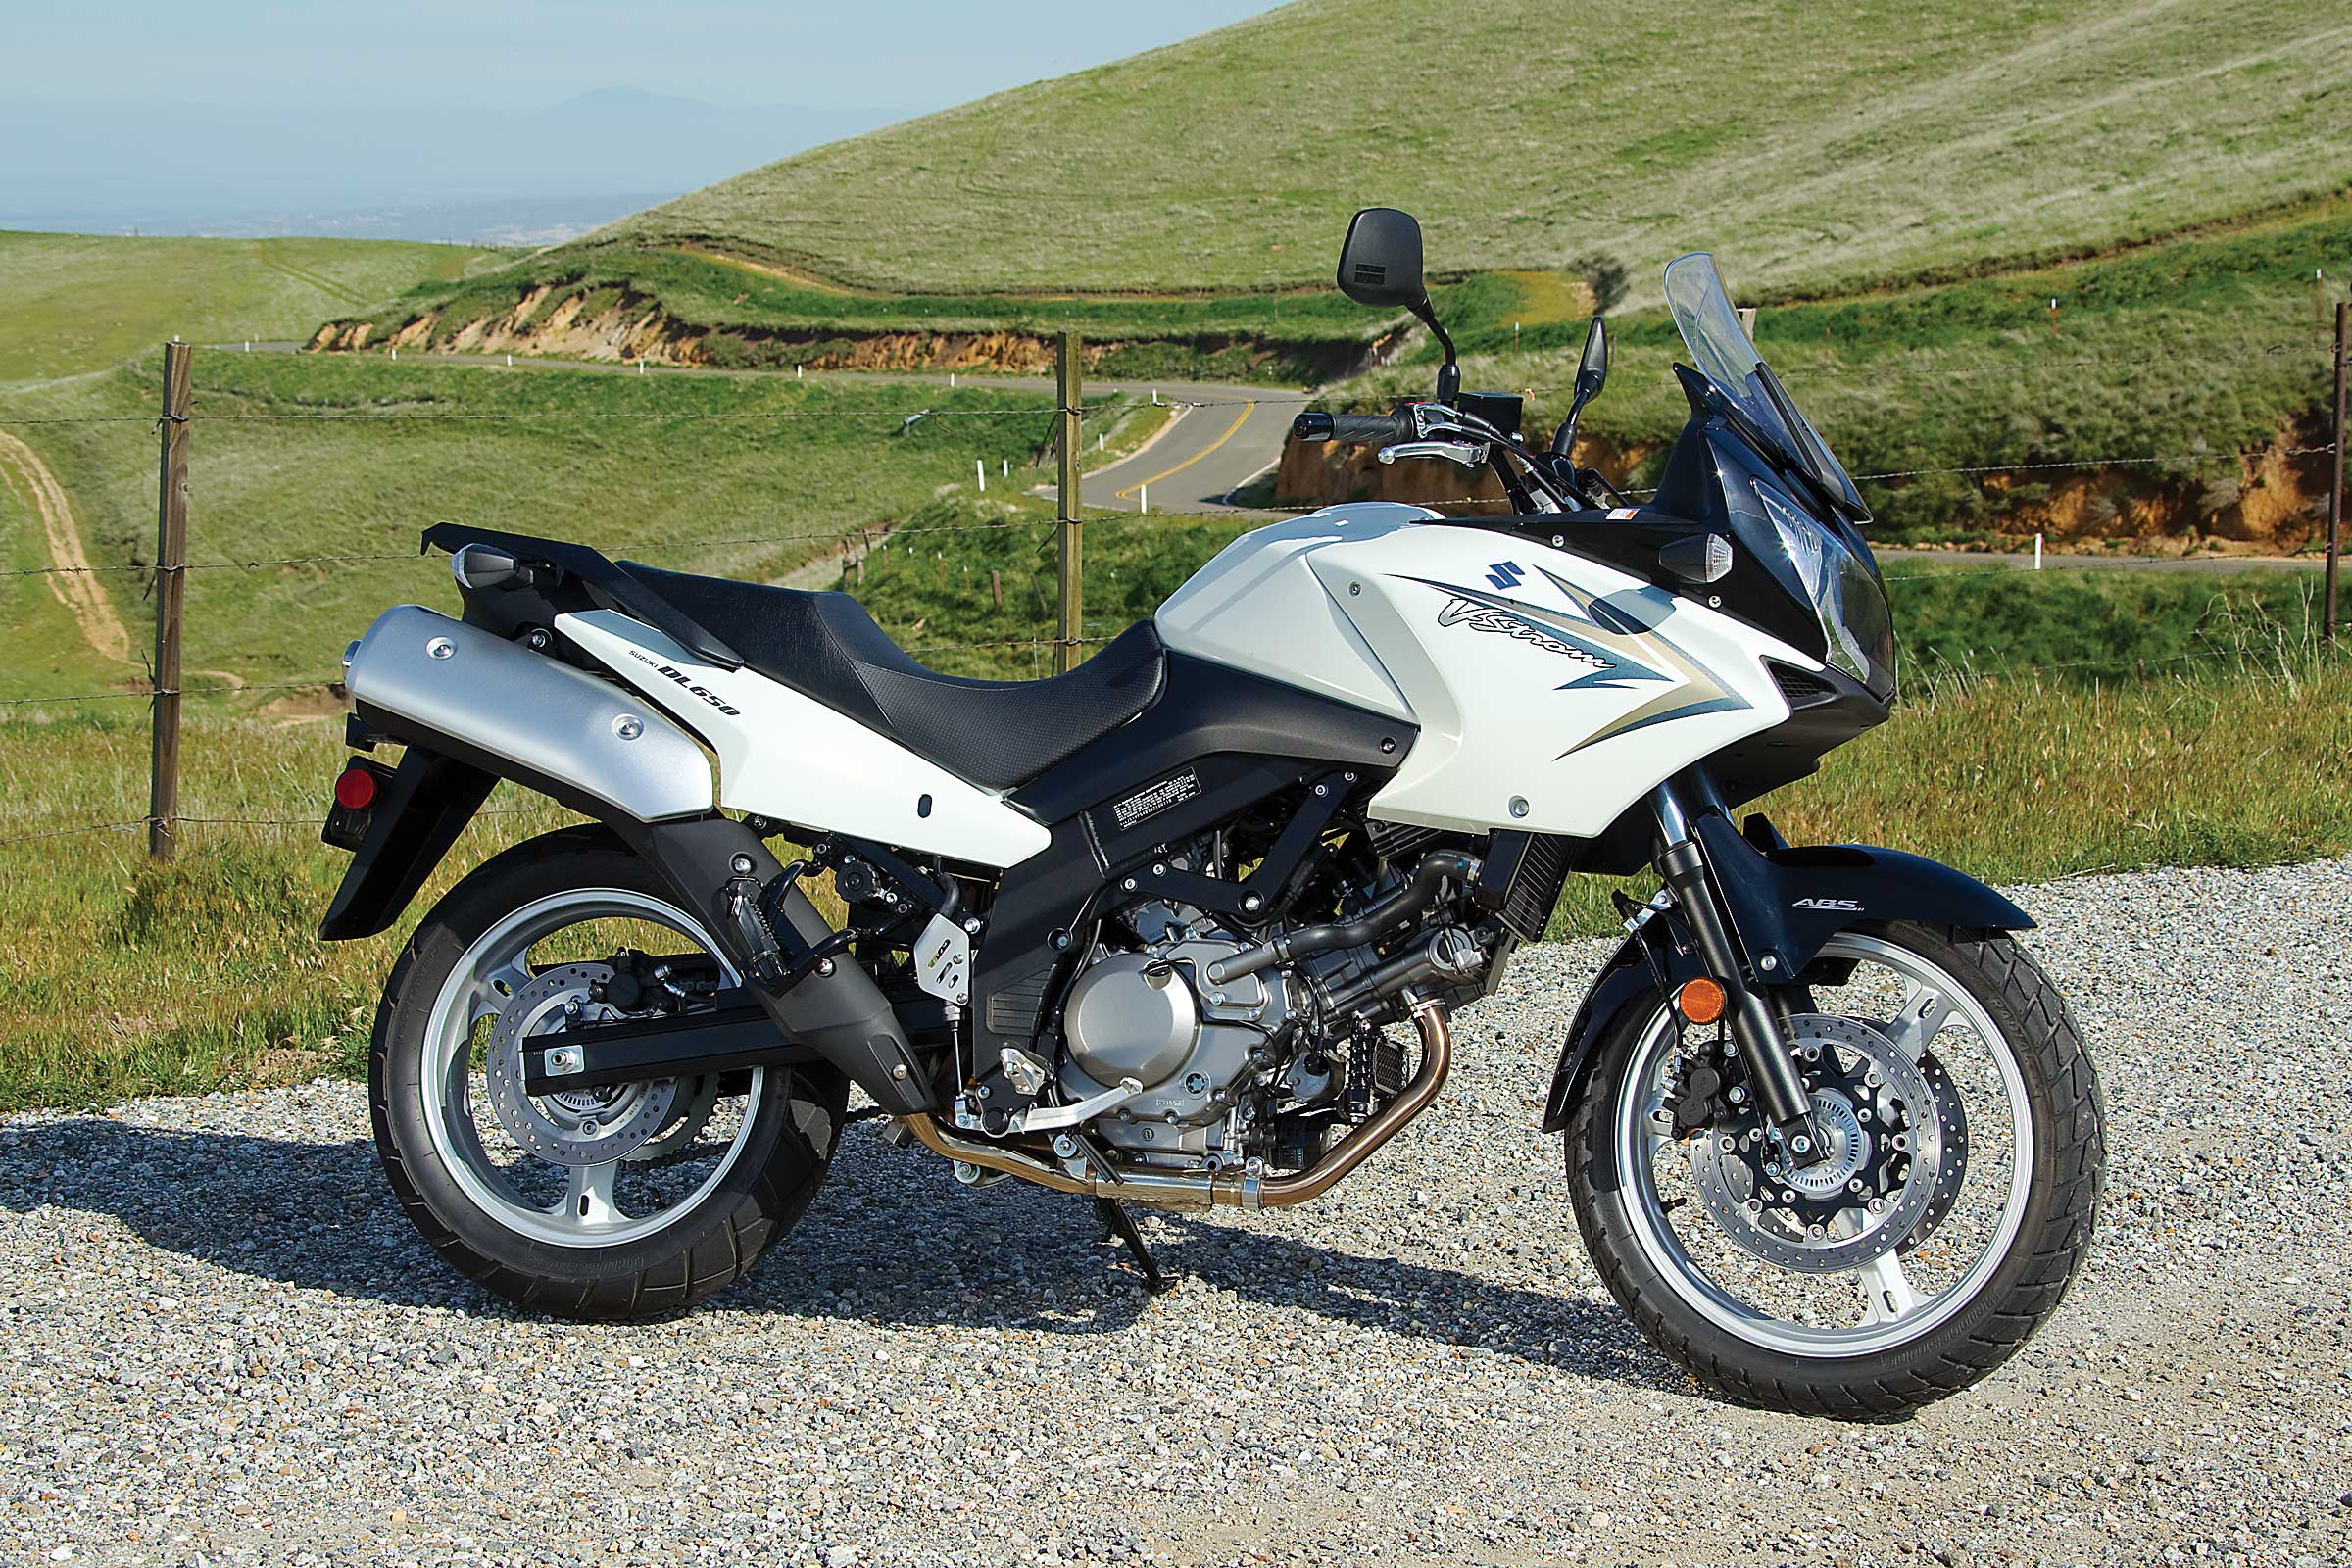 SUZUKI DL650 V-STROM ABS (2011-on) Motorcycle Review